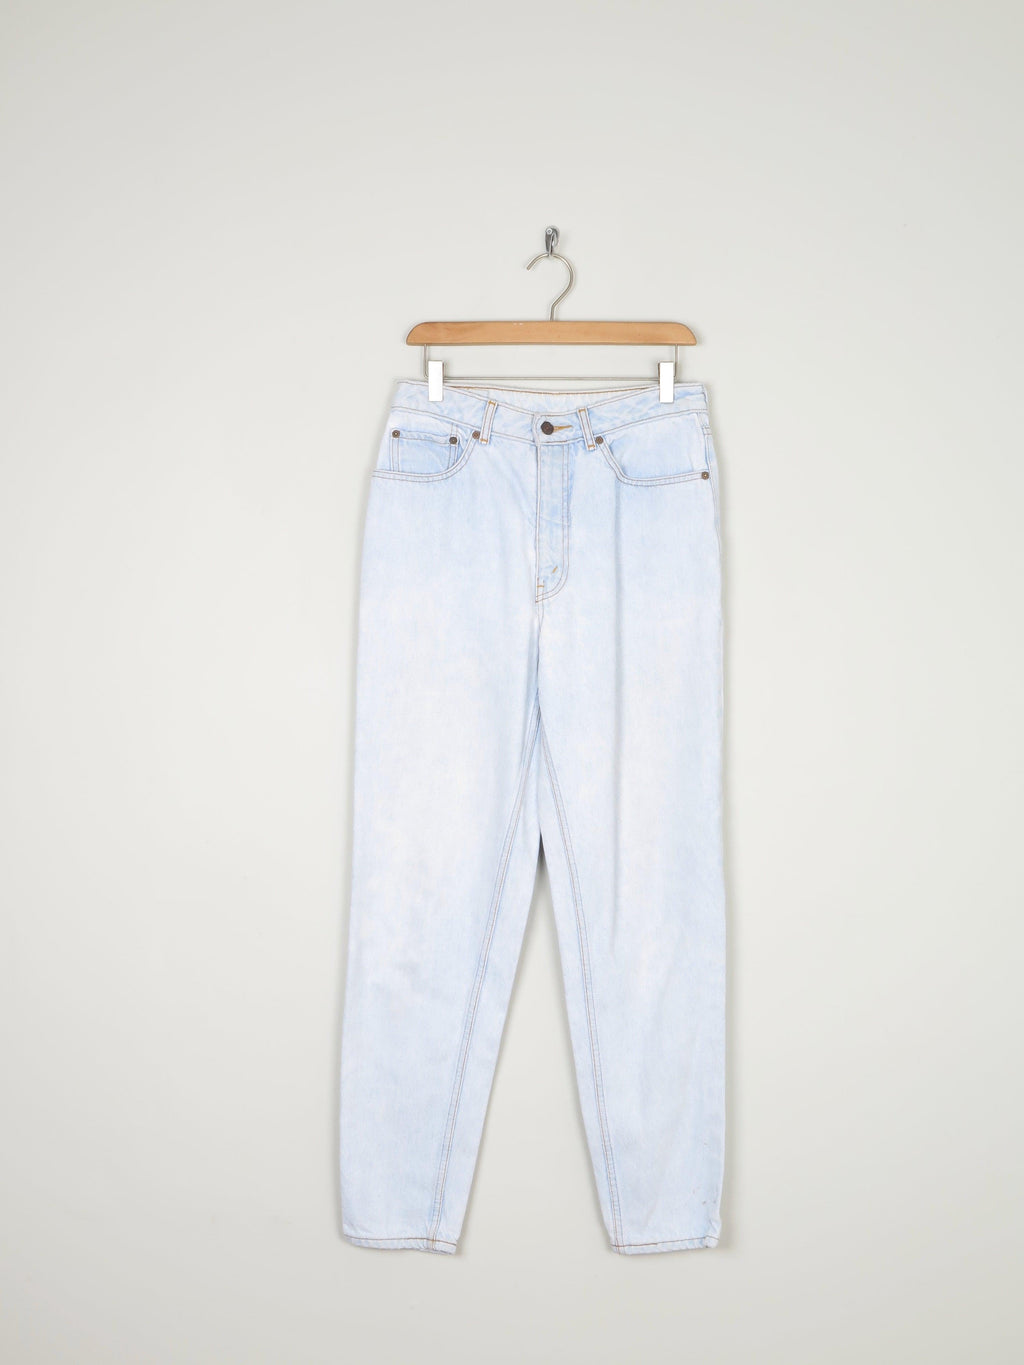 Light Denim Levis High Waist Jeans 30W - The Harlequin